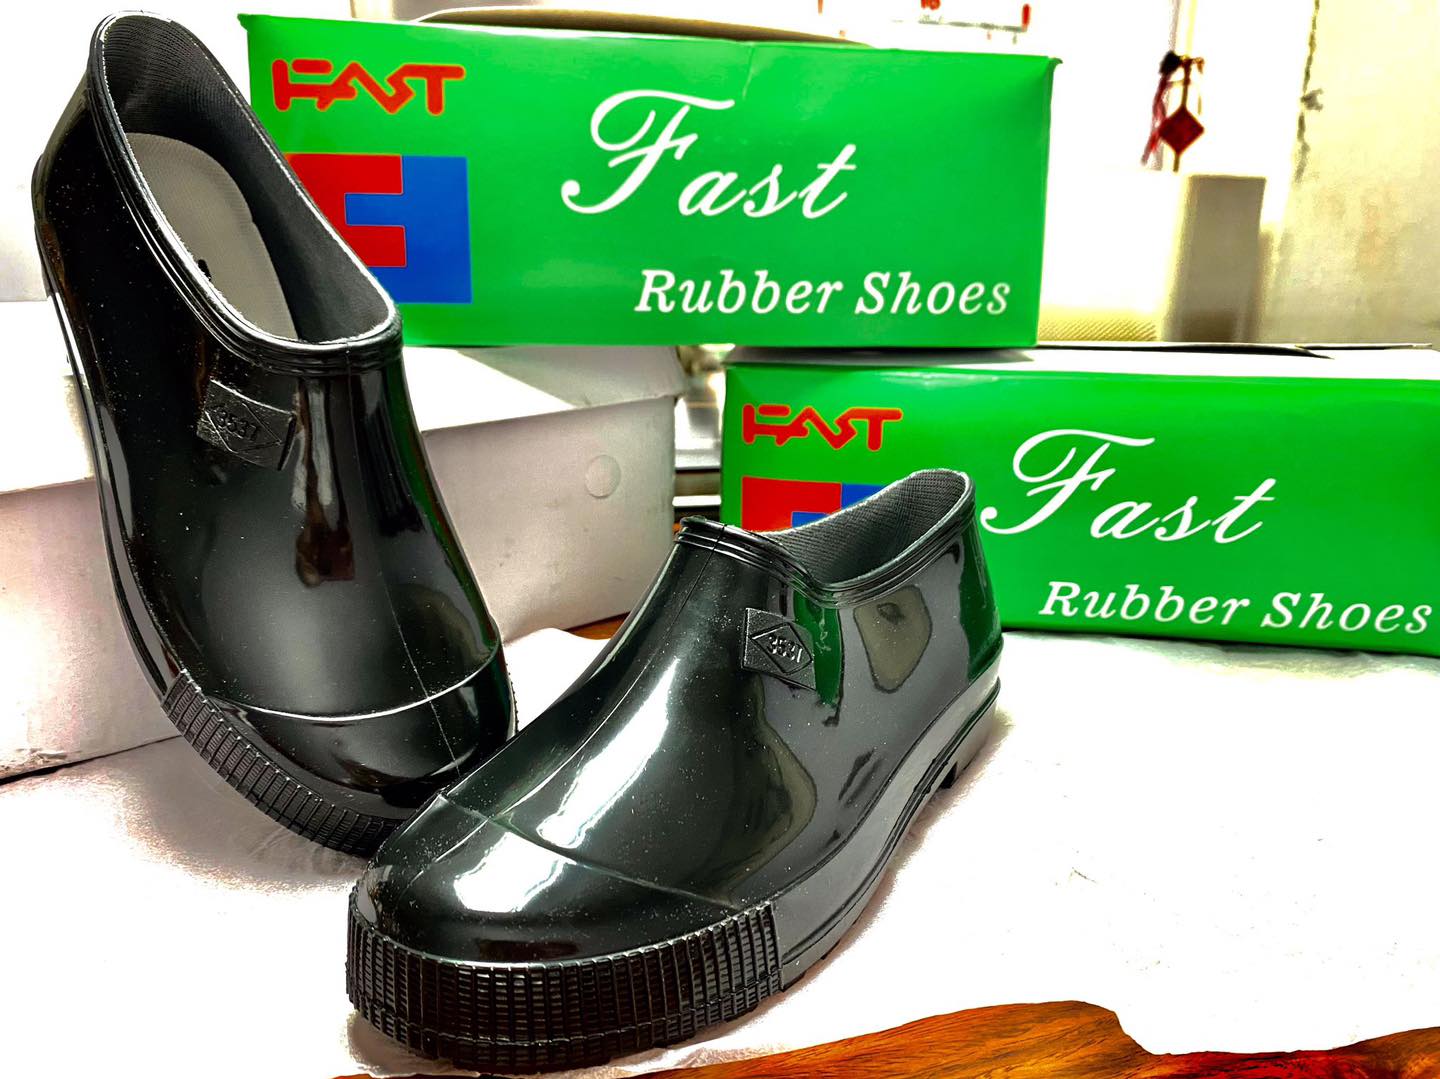 Labor Rain Shoes (Heels)-FAST-BK-EU Size: 39-偉豐鞋 WELL SHOE HK-Well Shoe-偉豐鞋-偉豐網-荃灣鞋店-Functional shoes-Hong Kong Tsuen Wan Shoe Store-Tai Wan Shoe-Japan Shoe-高品質功能鞋-台灣進口鞋-日本進口鞋-High-quality shoes-鞋類配件-荃灣進口鞋-香港鞋店-優質鞋類產品-水靴-帆布鞋-廚師鞋-香港鞋品牌-Hong Kong Shoes brand-長者鞋-Hong Kong Rain Boots-Kitchen shoes-Cruthes-Slipper-Well Shoe Hong Kong-Anello-Arriba-休閒鞋-舒適鞋-健康鞋-皮鞋-Healthy shoes-Leather shoes-Hiking shoes